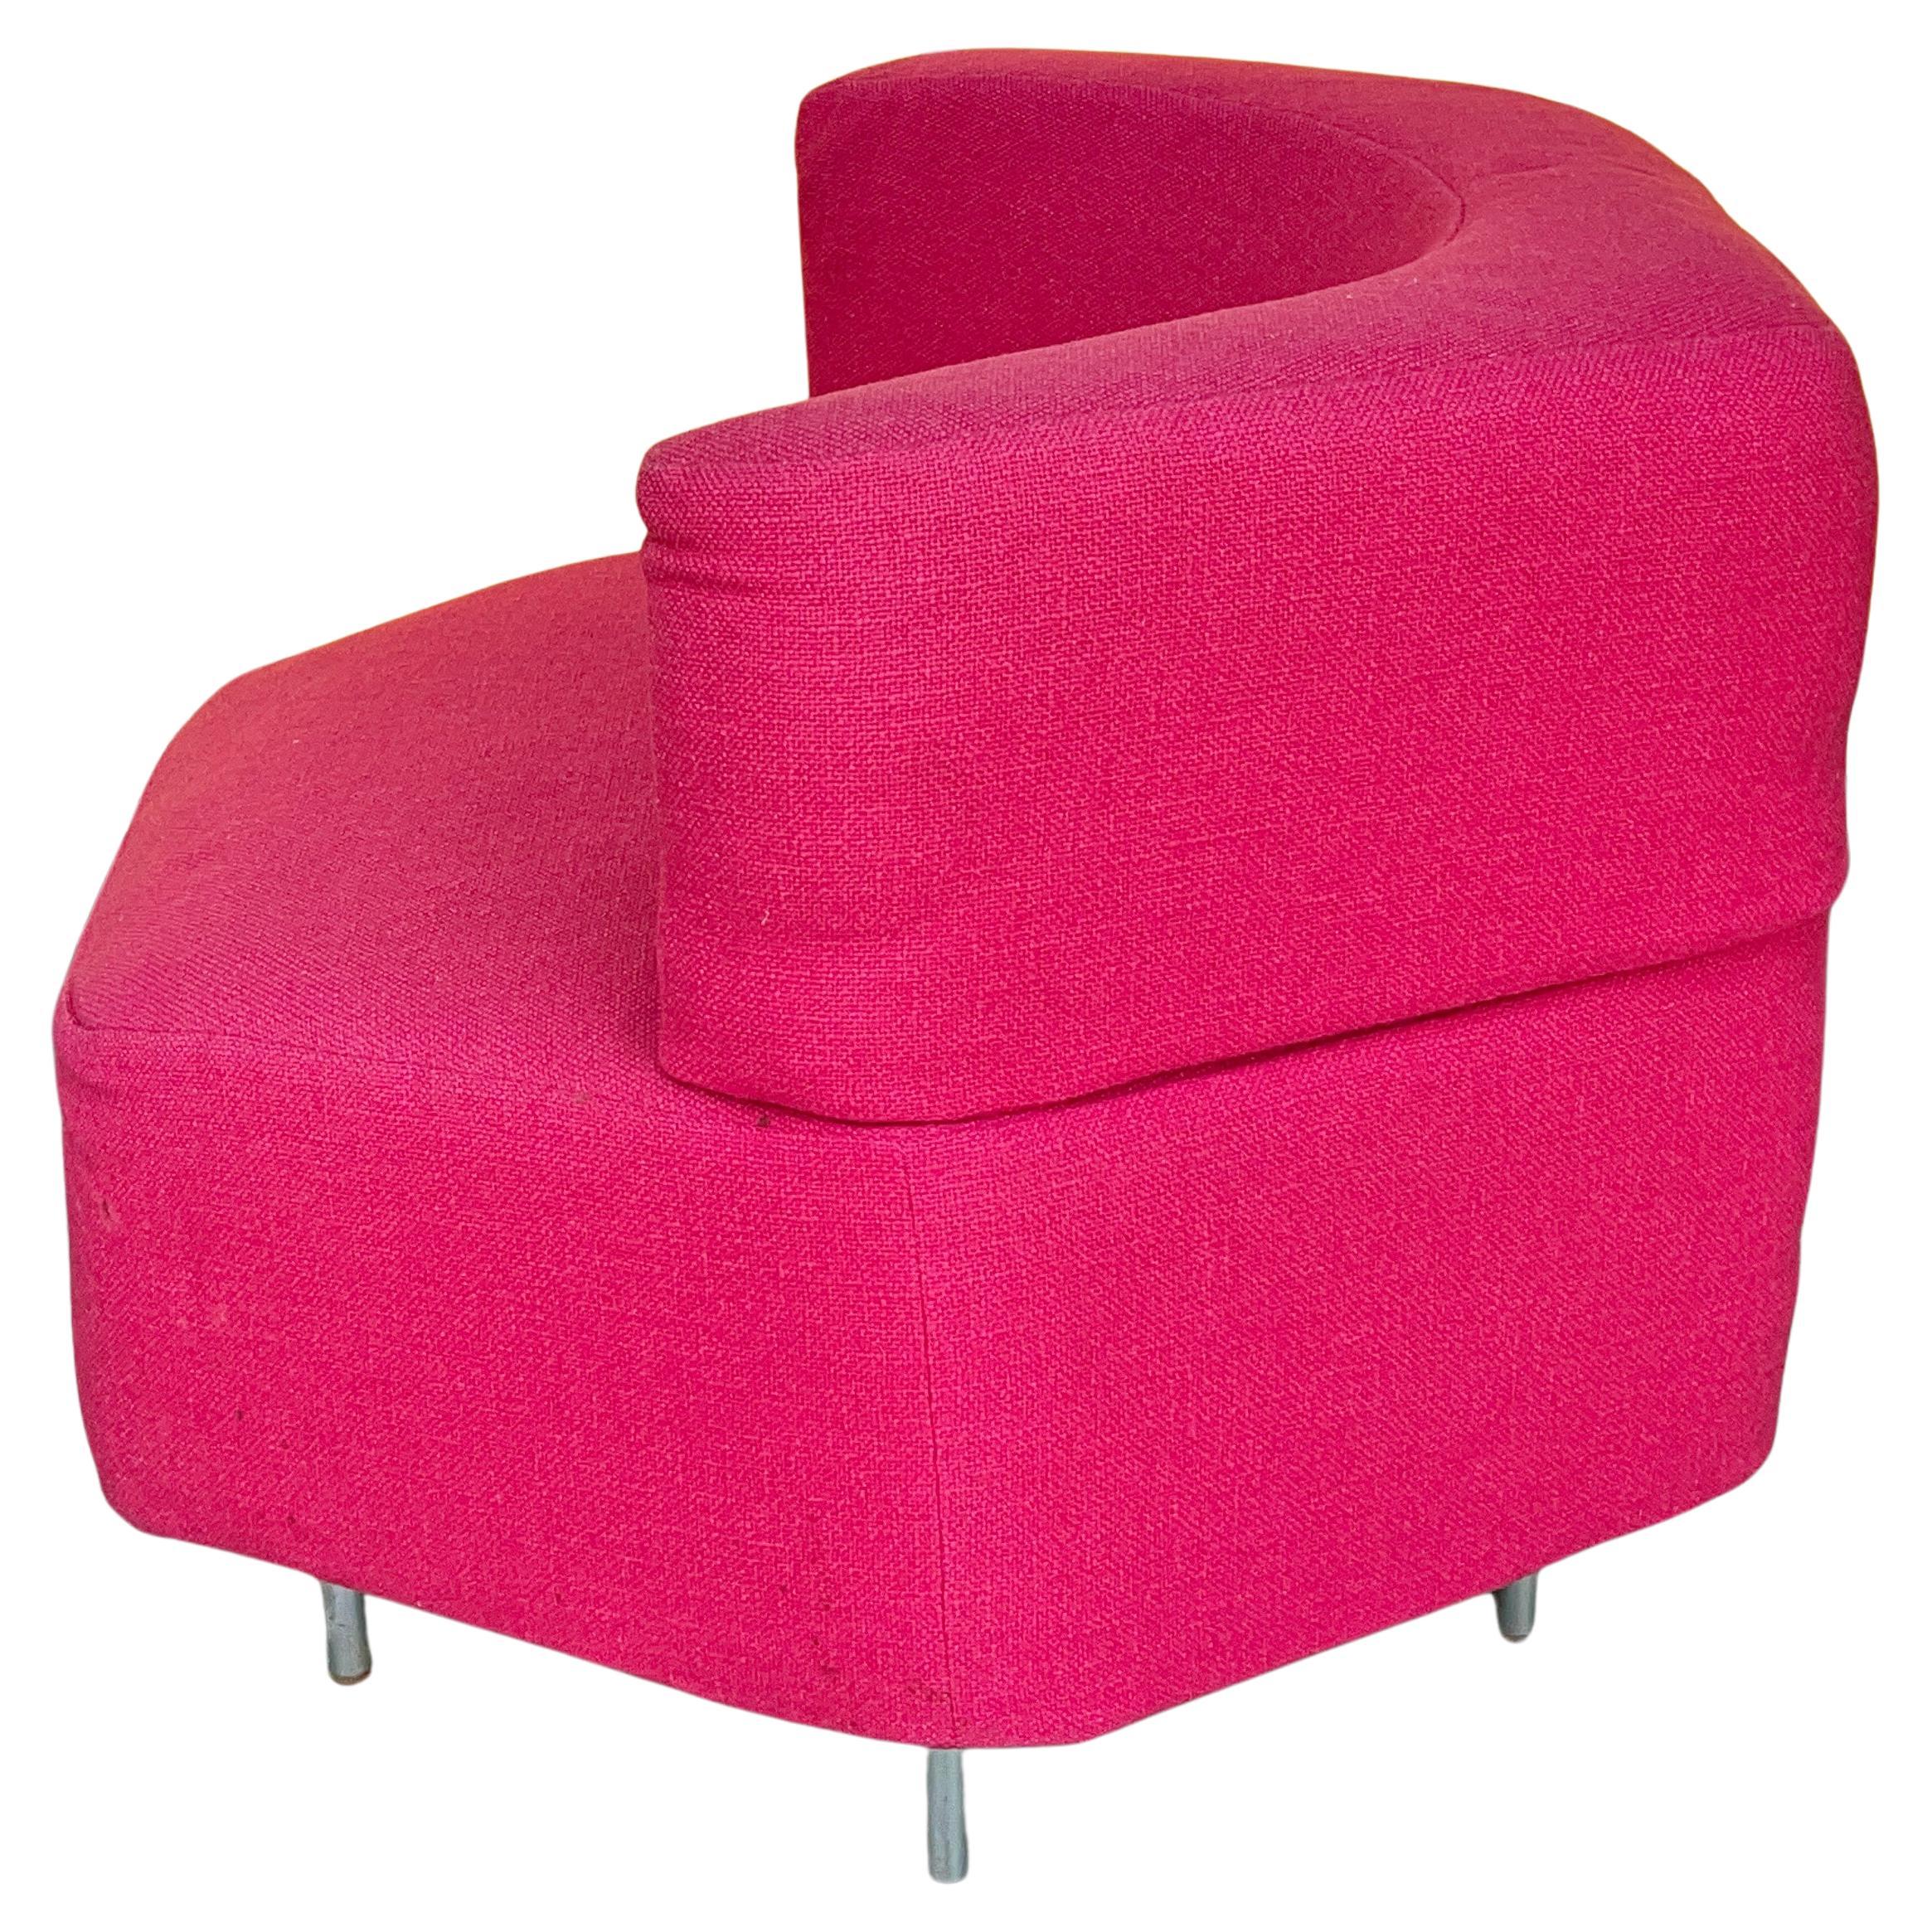 Harvey Probber Hexabloc Chair For Sale